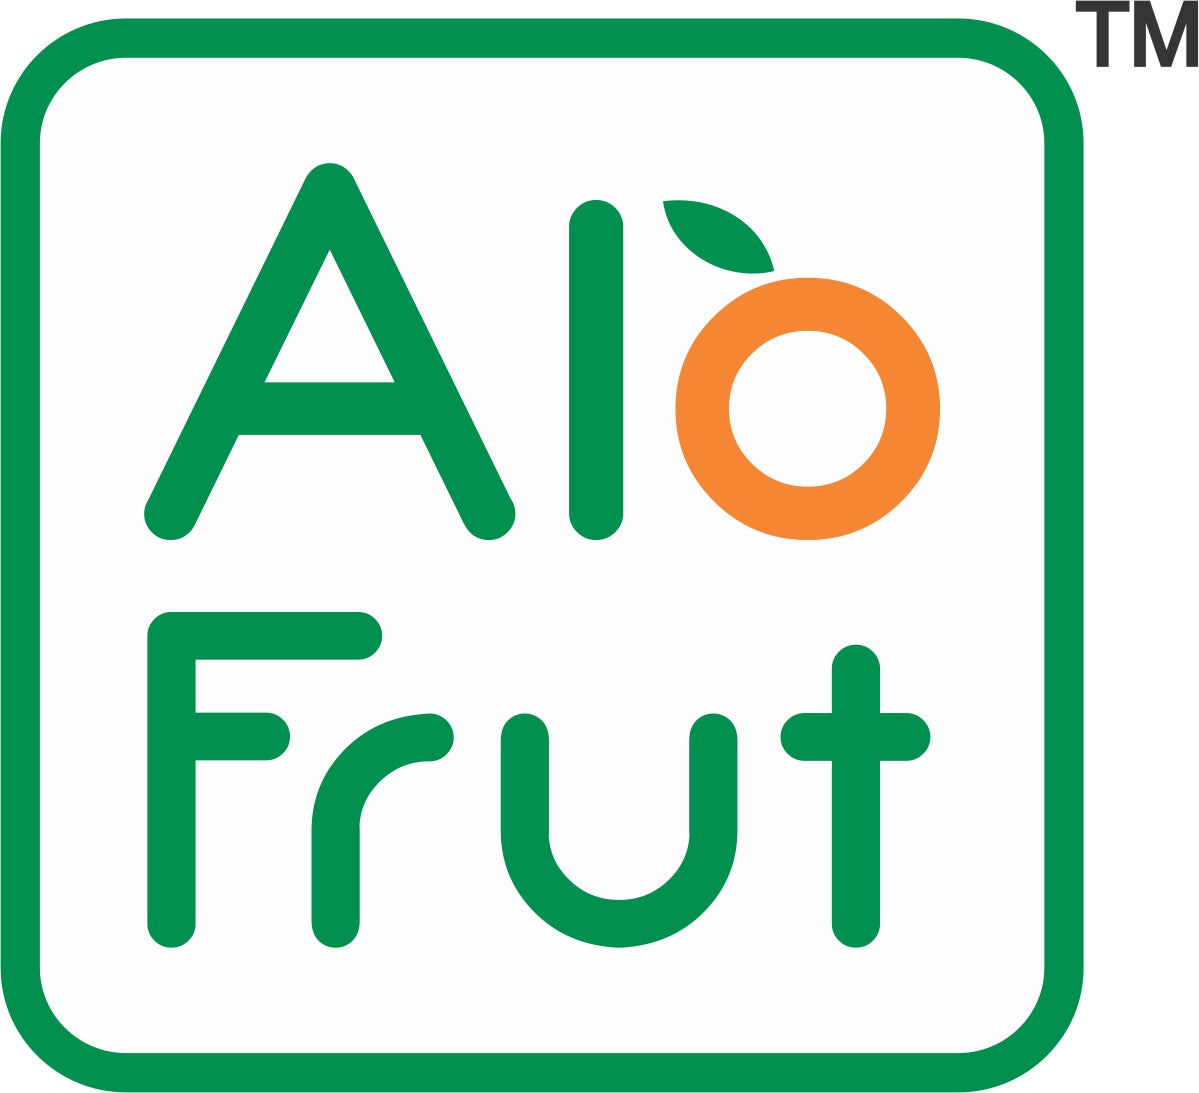 Alo Frut Berries Aloevera Chunks & Juice 300ml (Pack of 24)